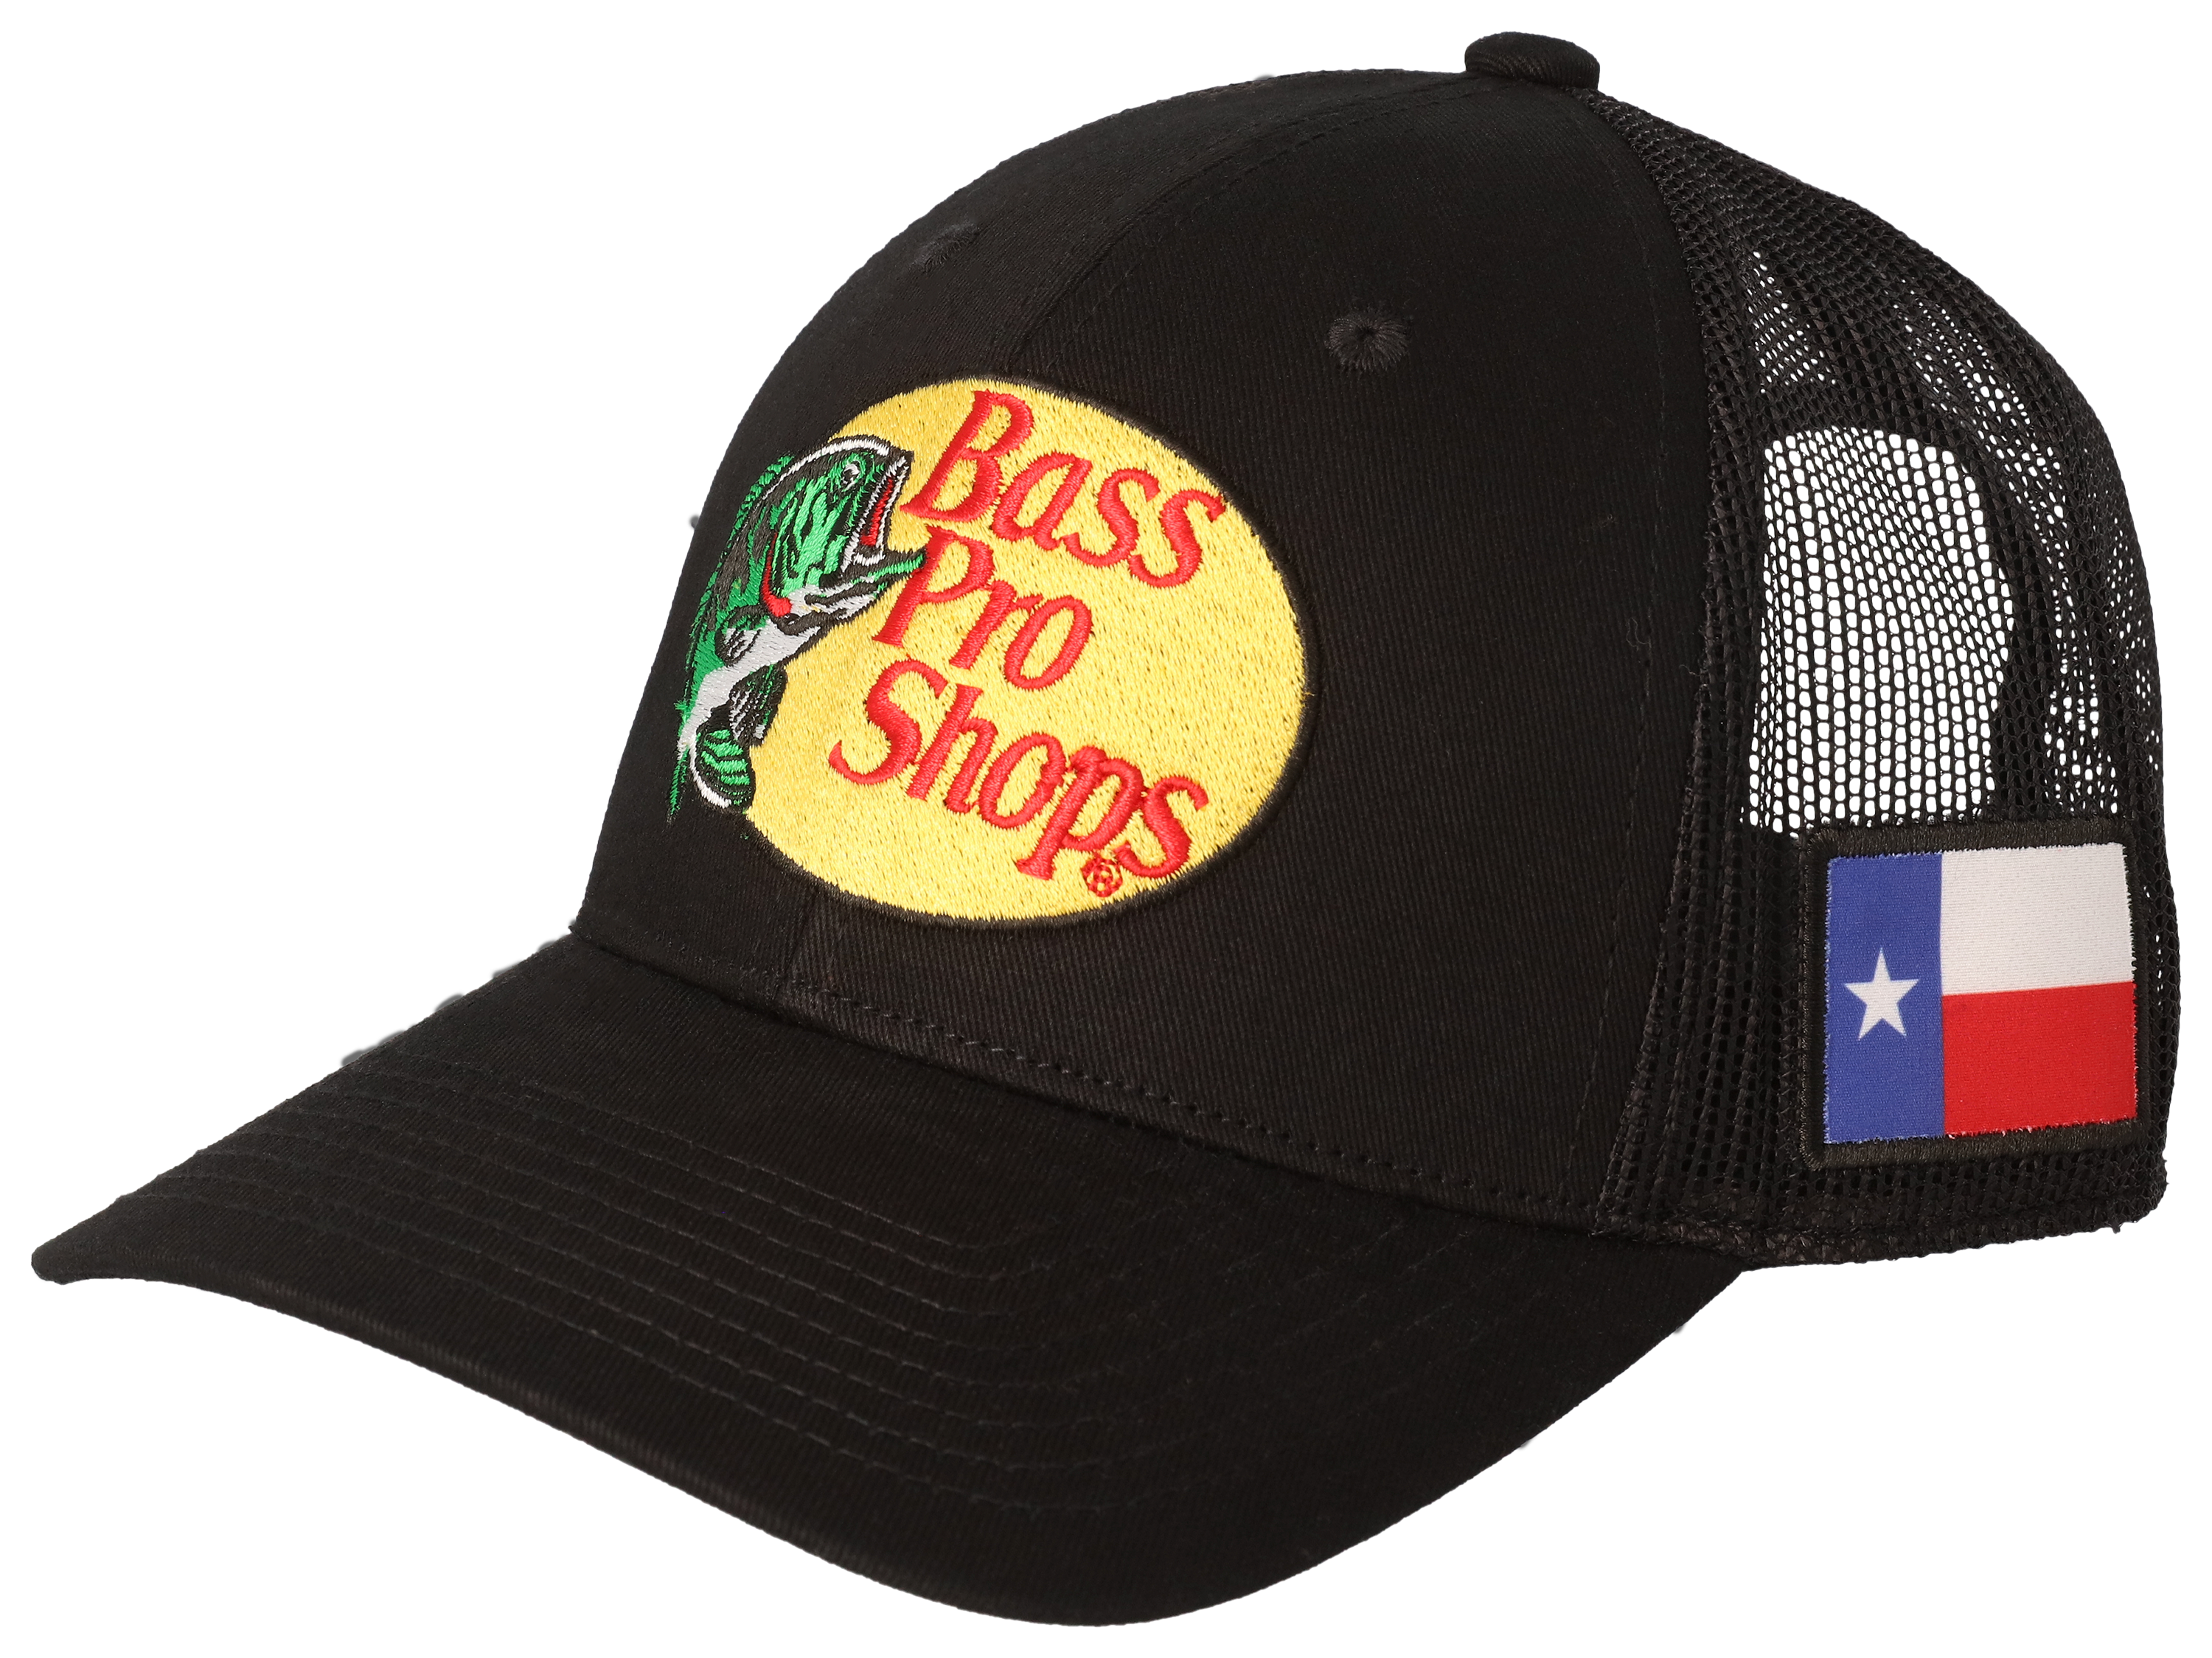 Bass Pro Shops Woodcut Logo and Texas Flag Snapback Cap